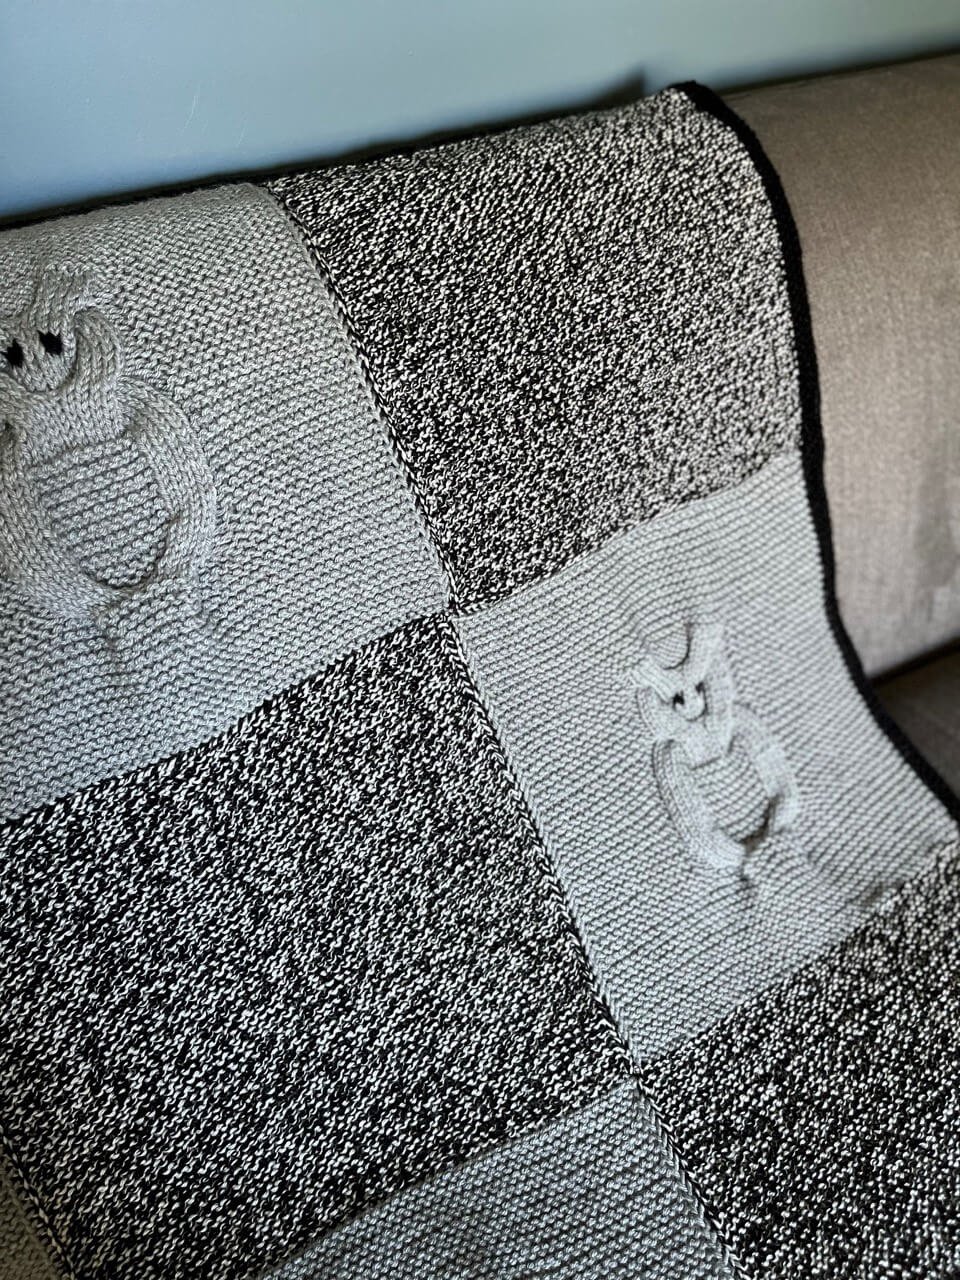 Image of Knit Kit - Owl Blanket